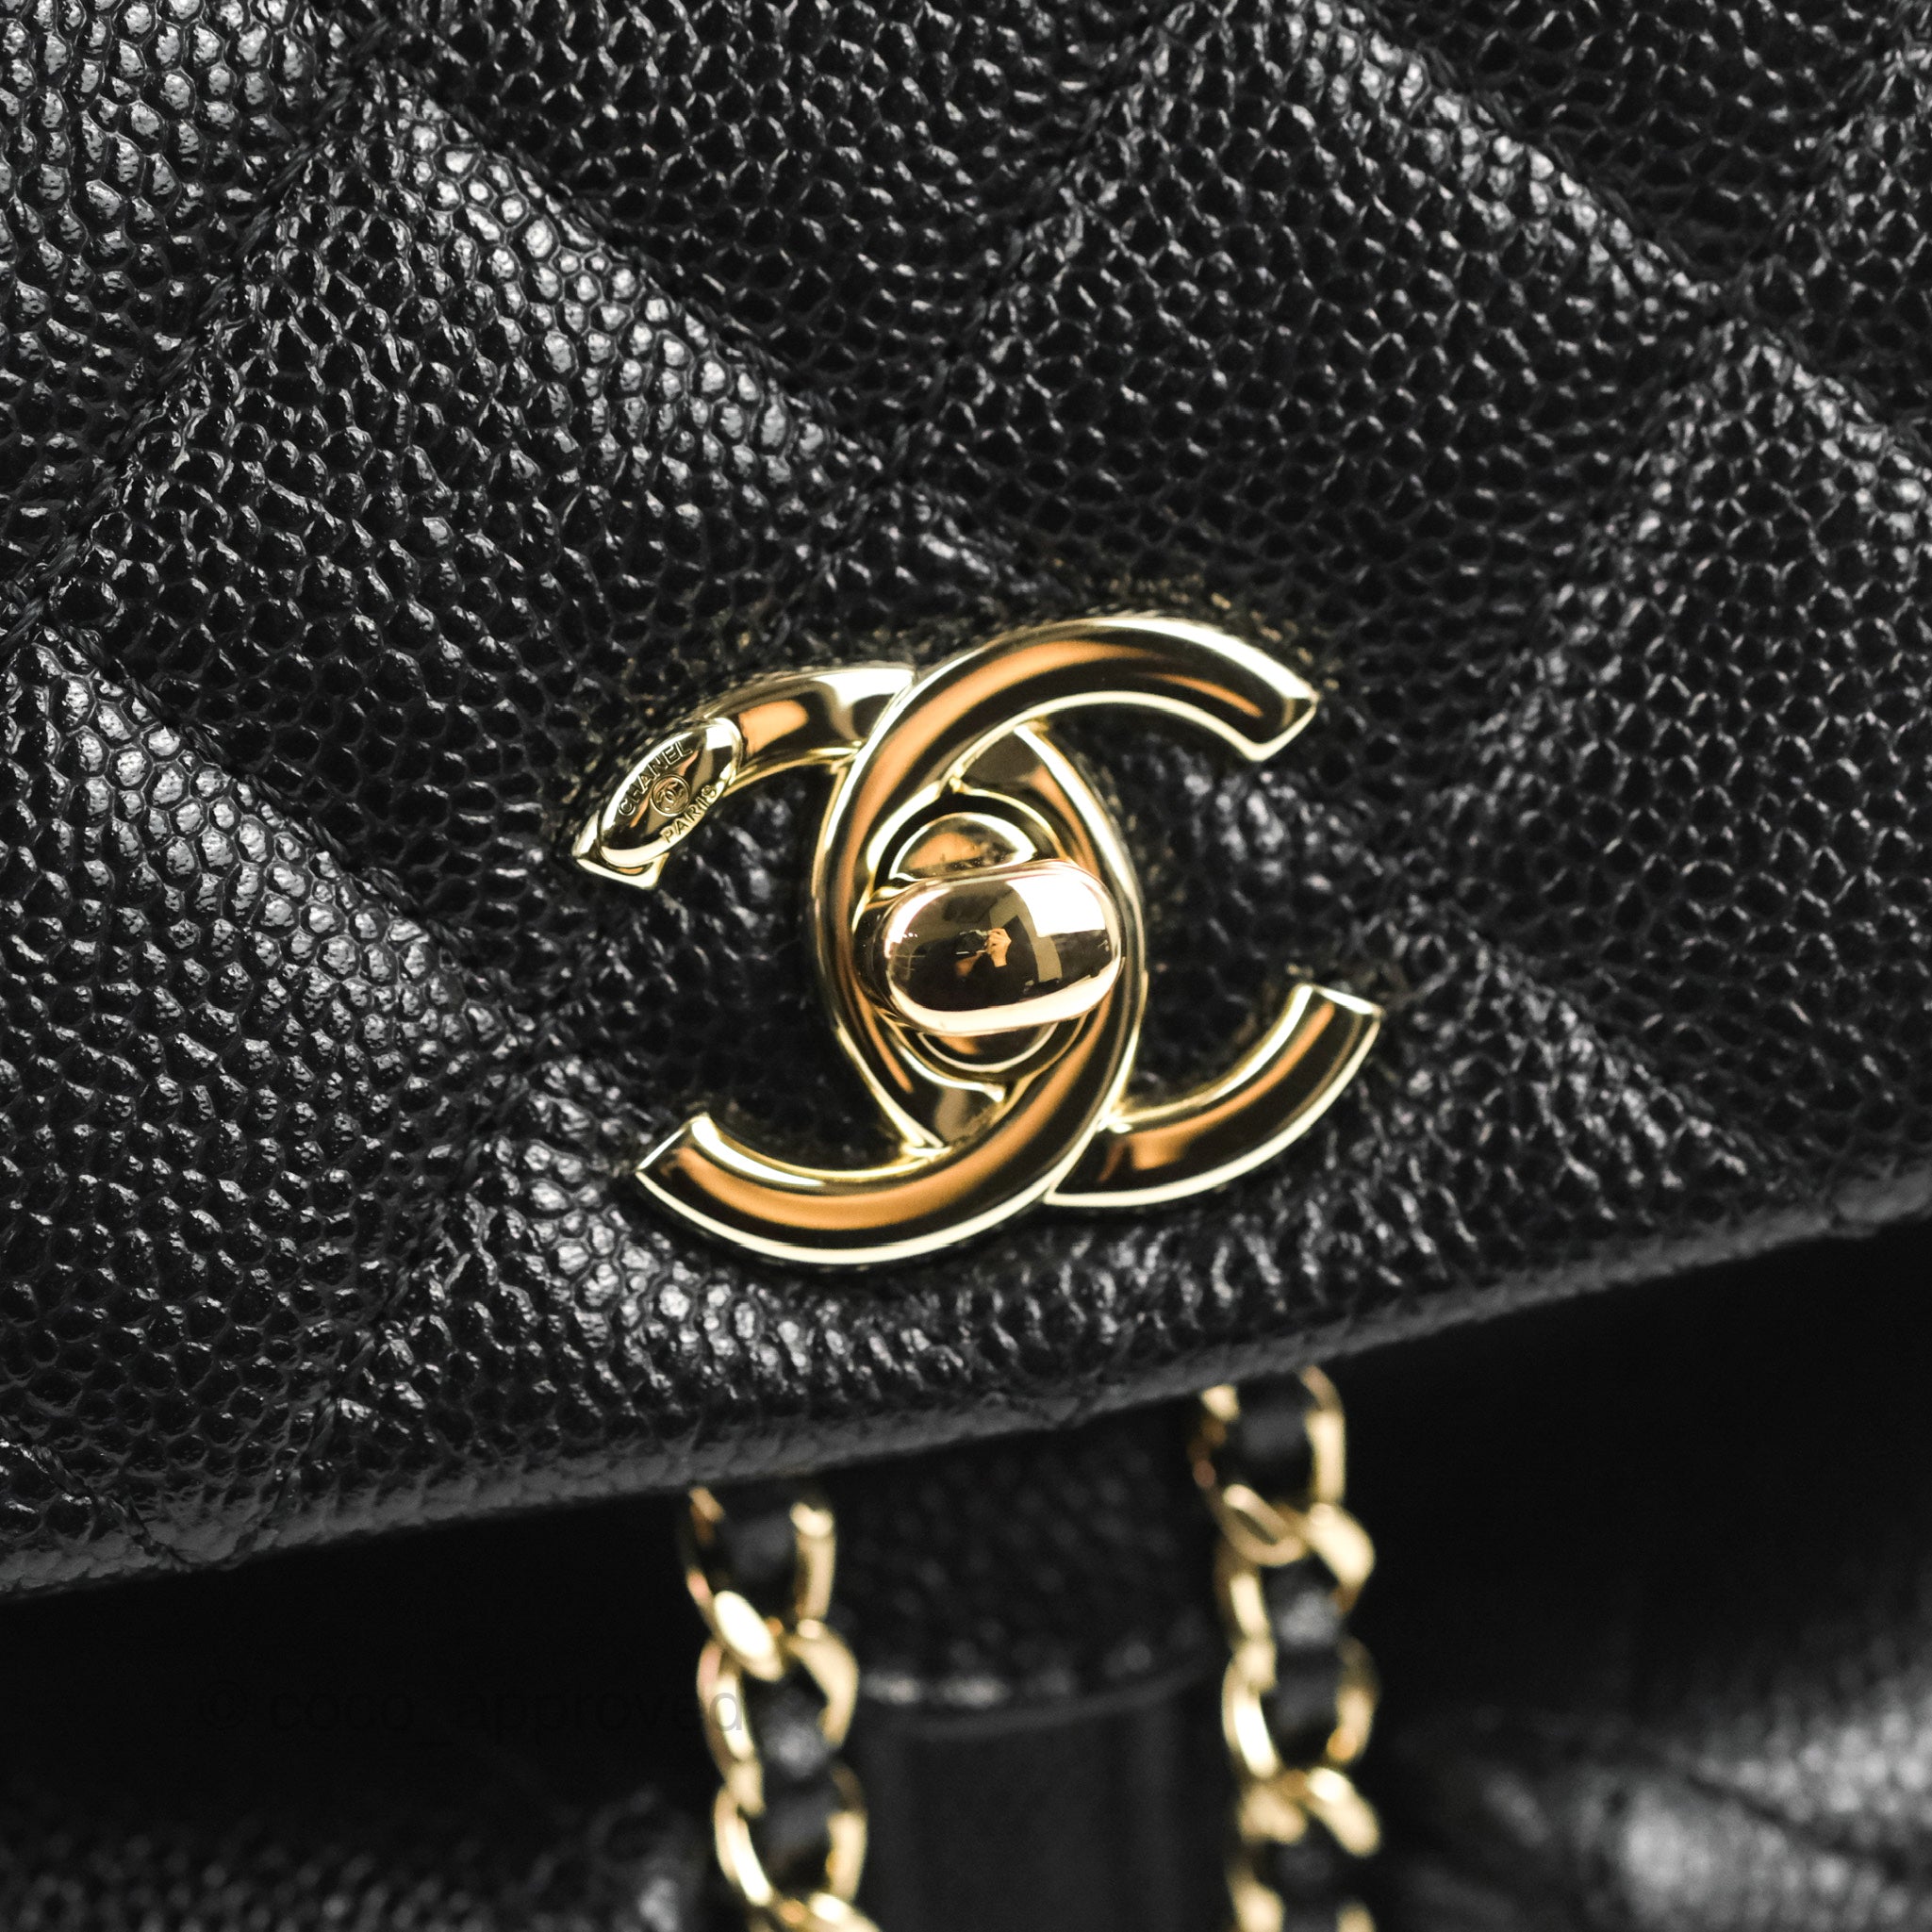 Chanel Duma Backpack Small Black Caviar Gold Hardware 23P – Coco Approved  Studio